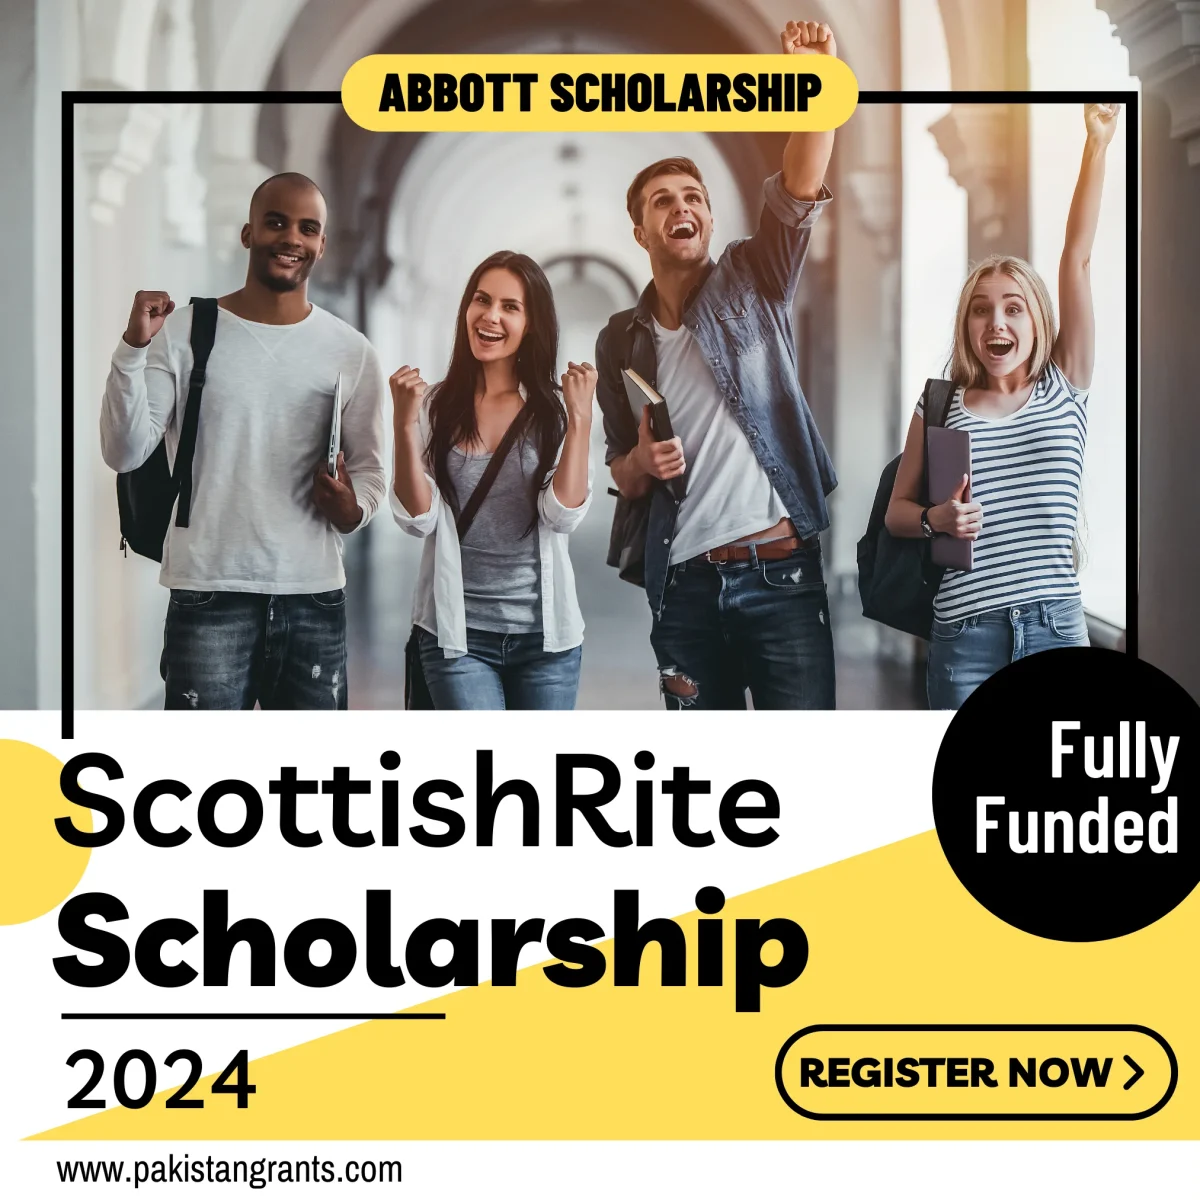 Scottish Rite Scholarship 2024 - The Illuminating Path to Education